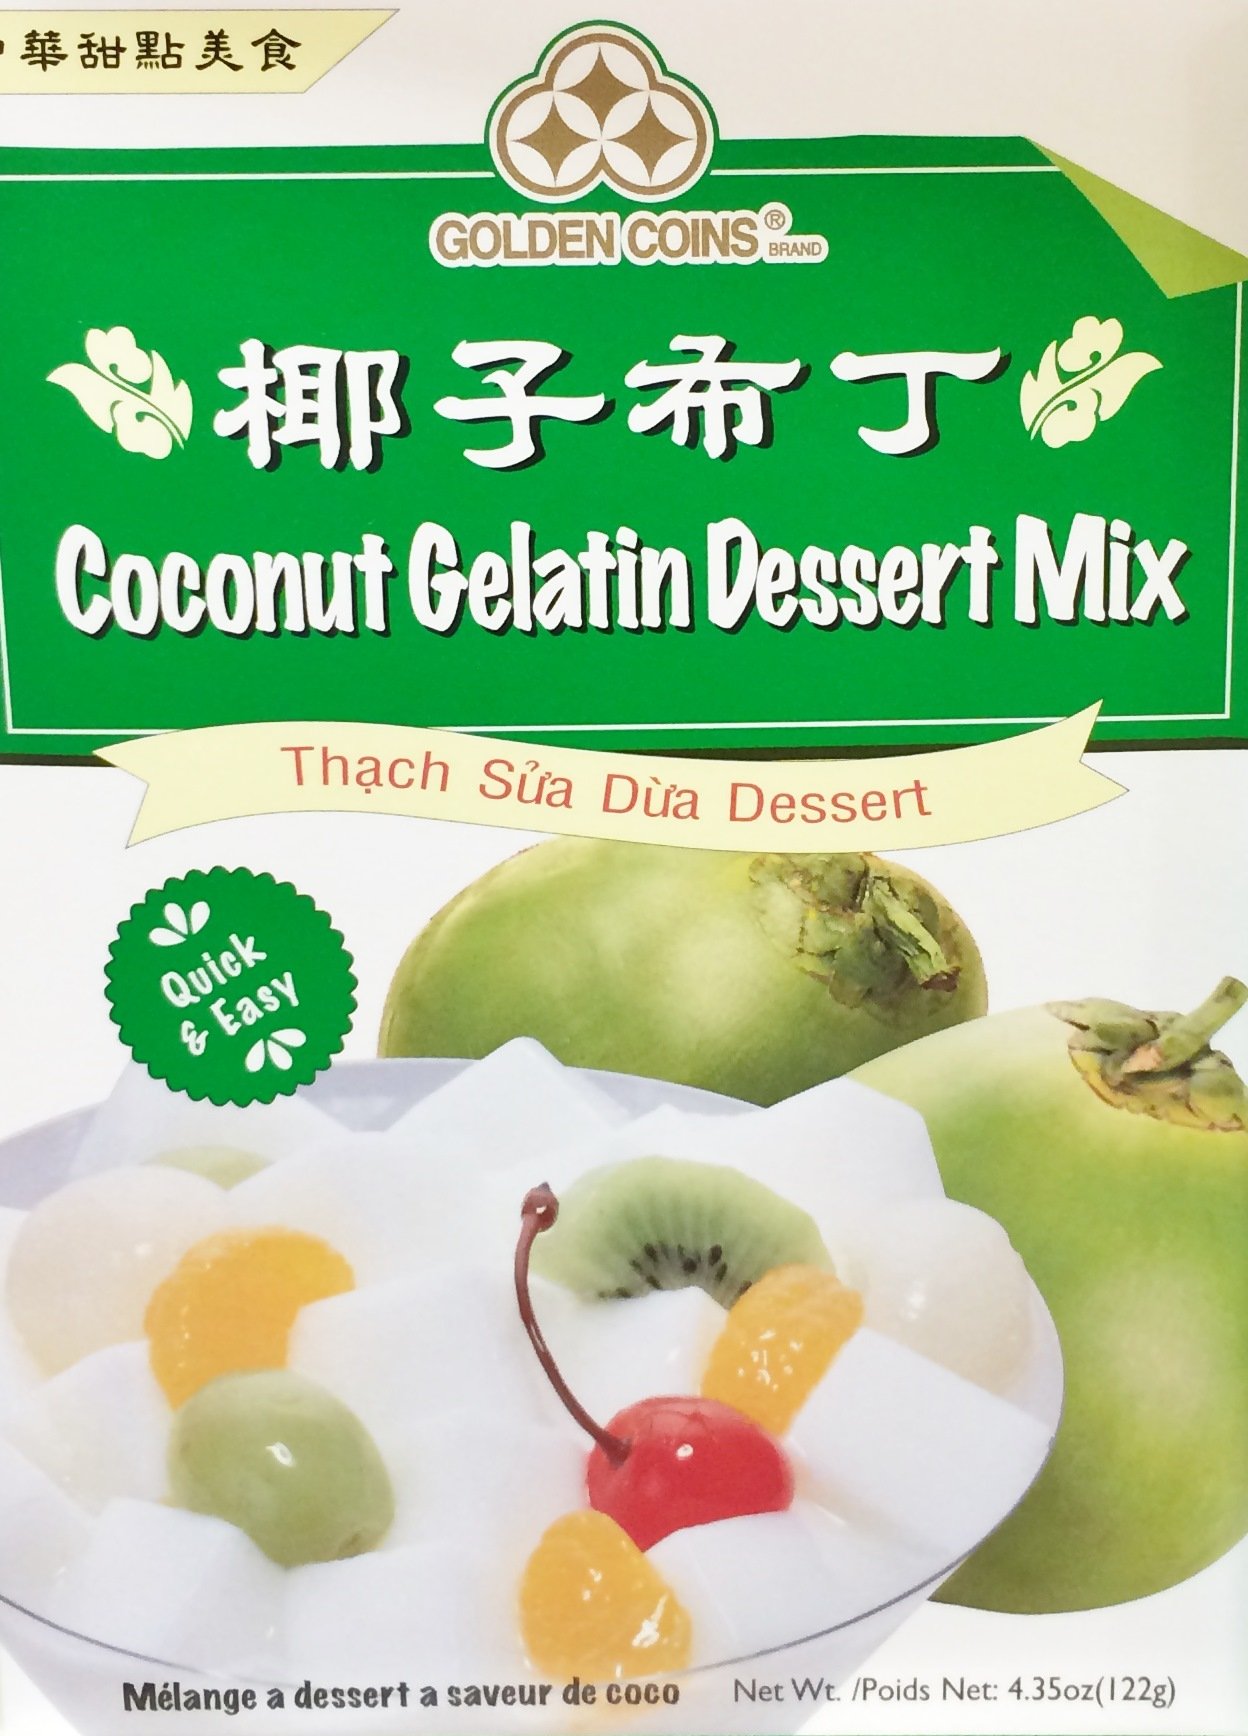 1 x 4.35oz Golden Coins Coconut Gelatin Oriental Dessert Mix. Just Add Water. Product of USA.